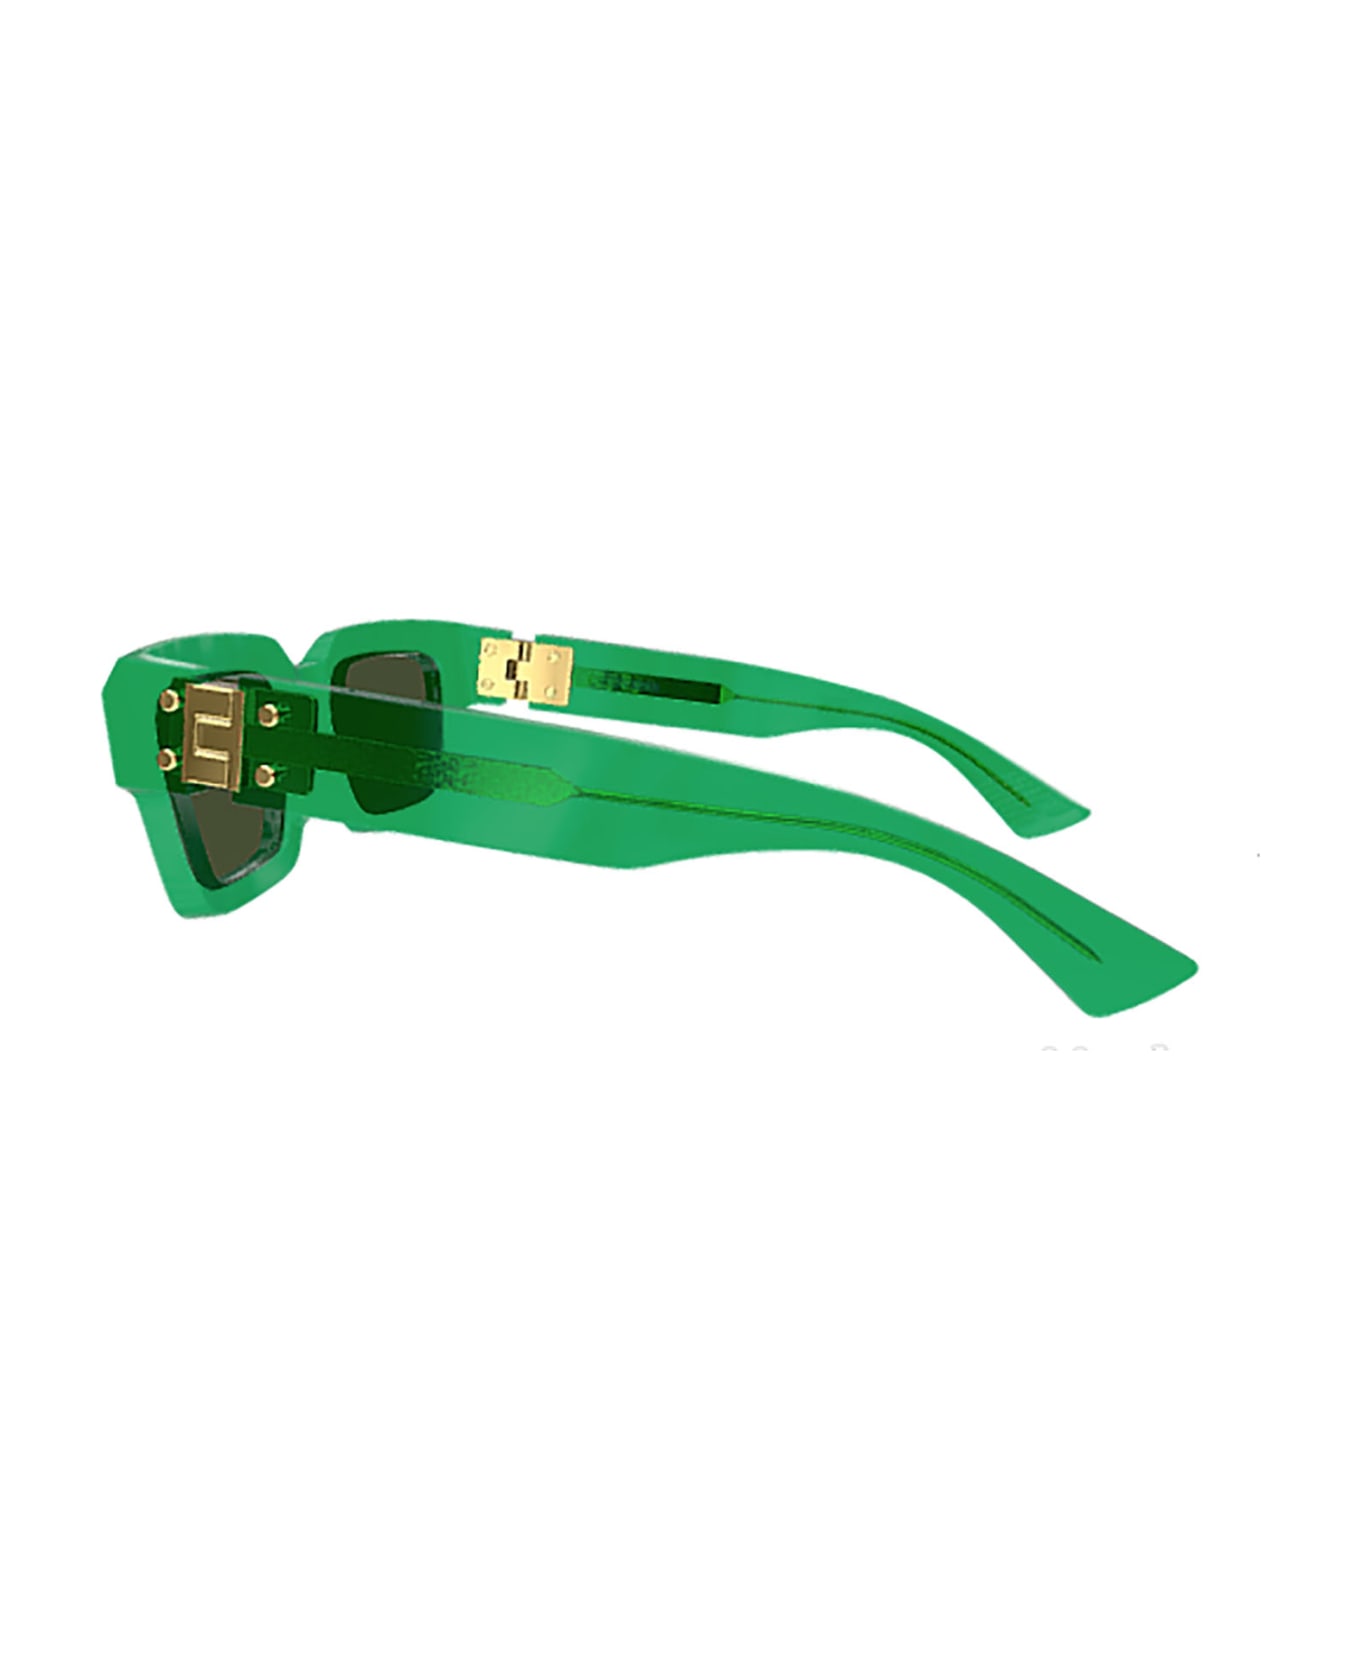 Bottega Veneta Eyewear 1g7r4ni0a - 002 green green green サングラス